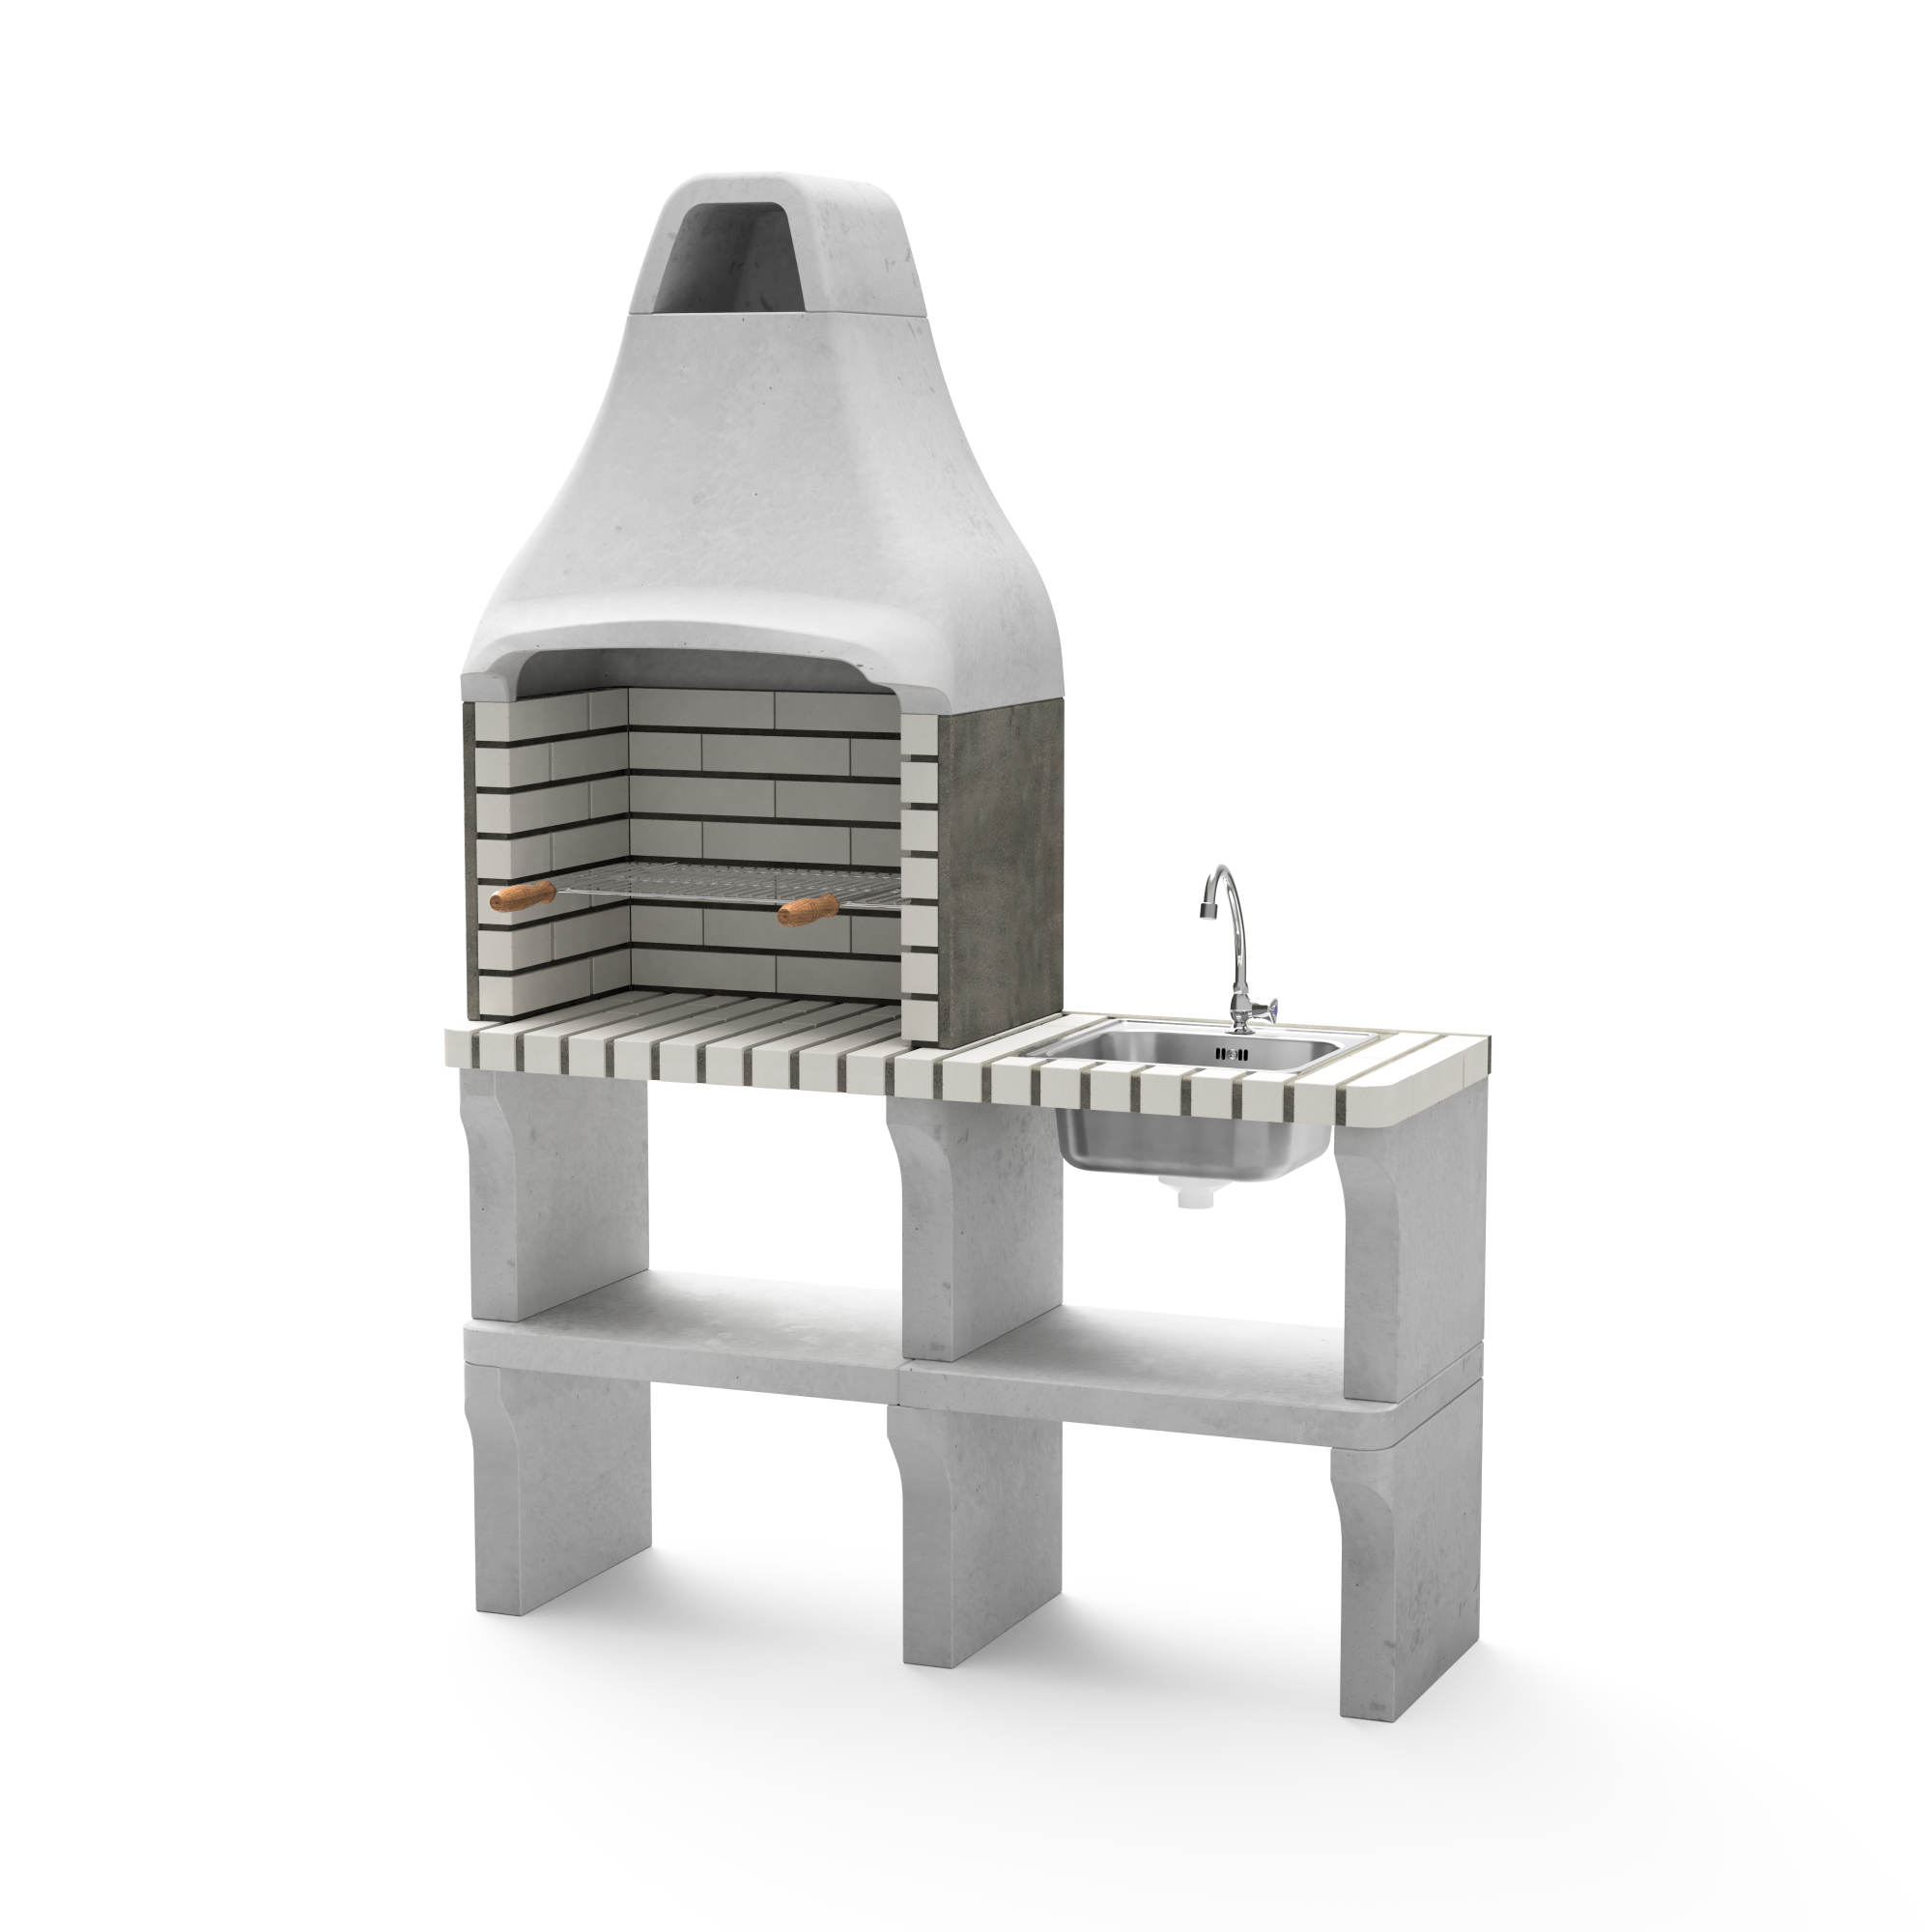 Barbecue new iberia plus xl module avec évier & robinet